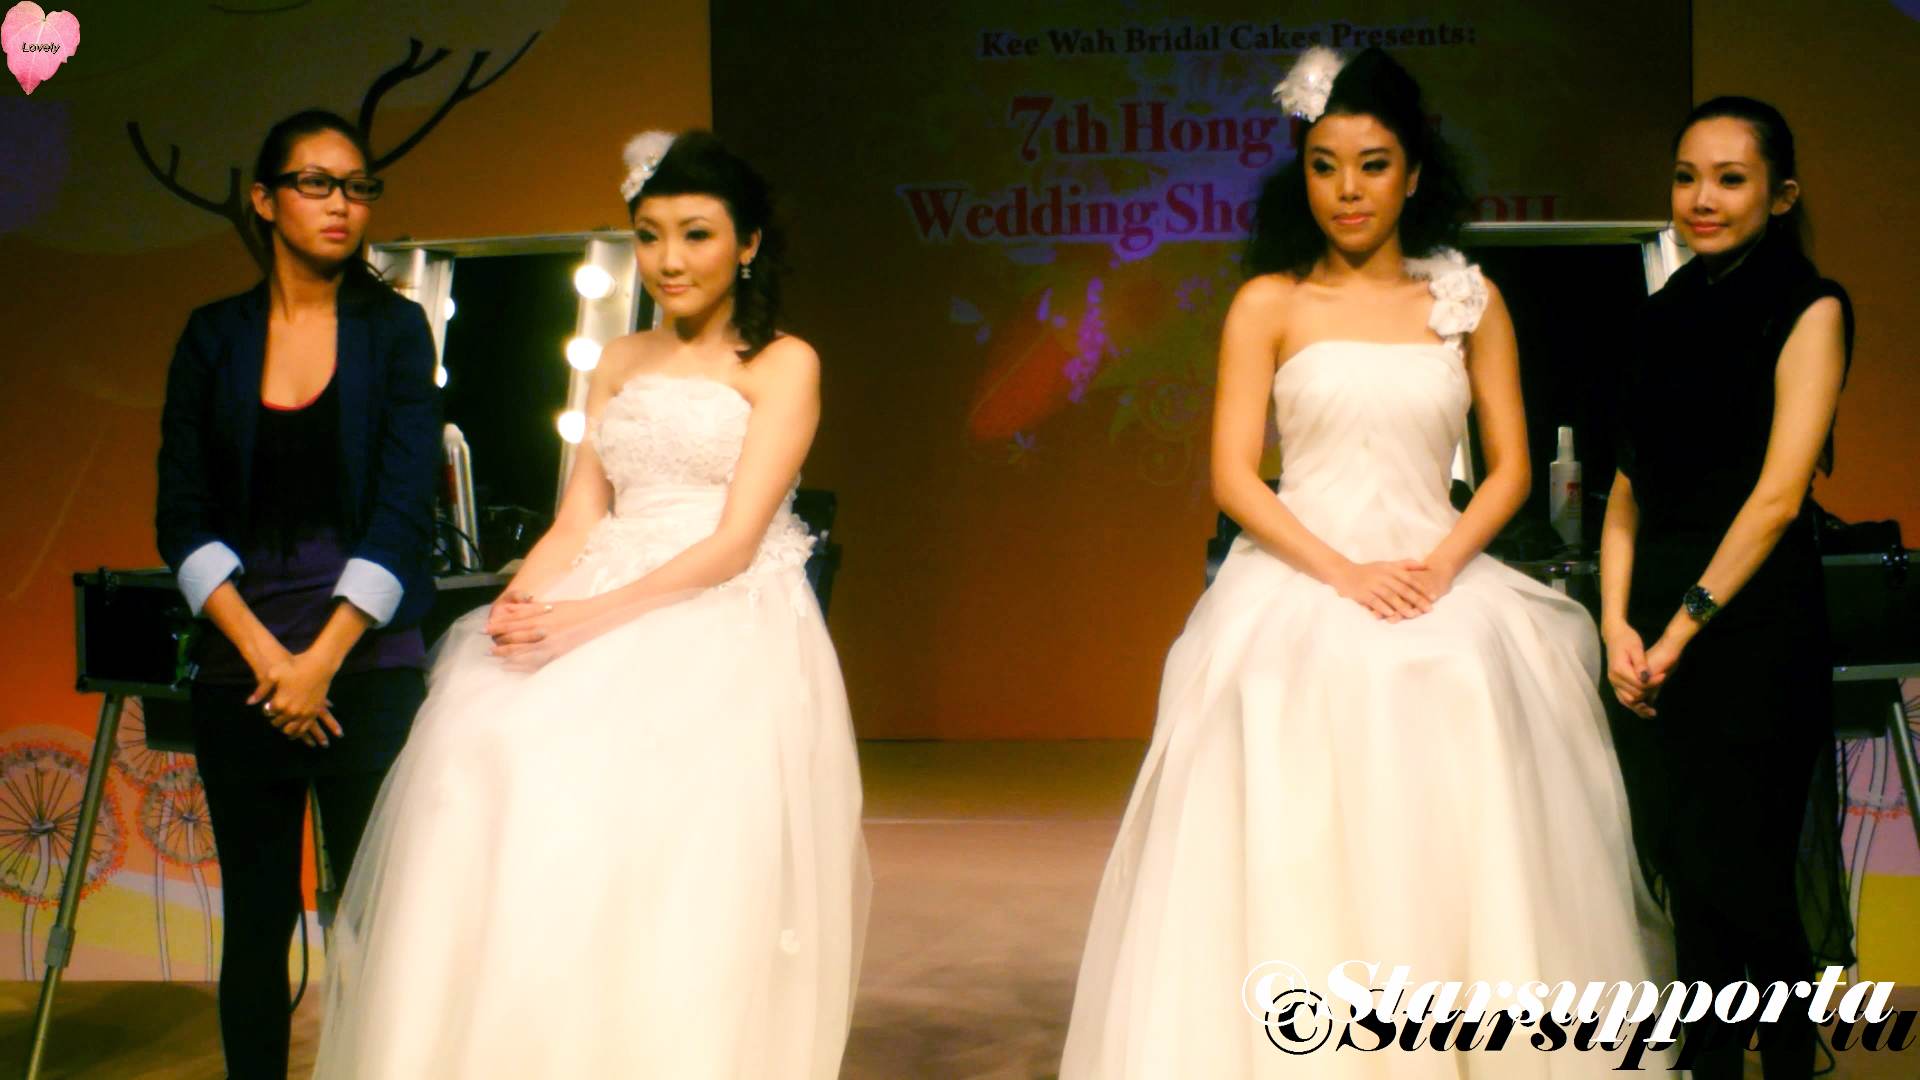 20110925 7th Hong Kong Wedding Showcase - Miracle Production: 高清新娘化妝示範 @ 香港Emax (video)